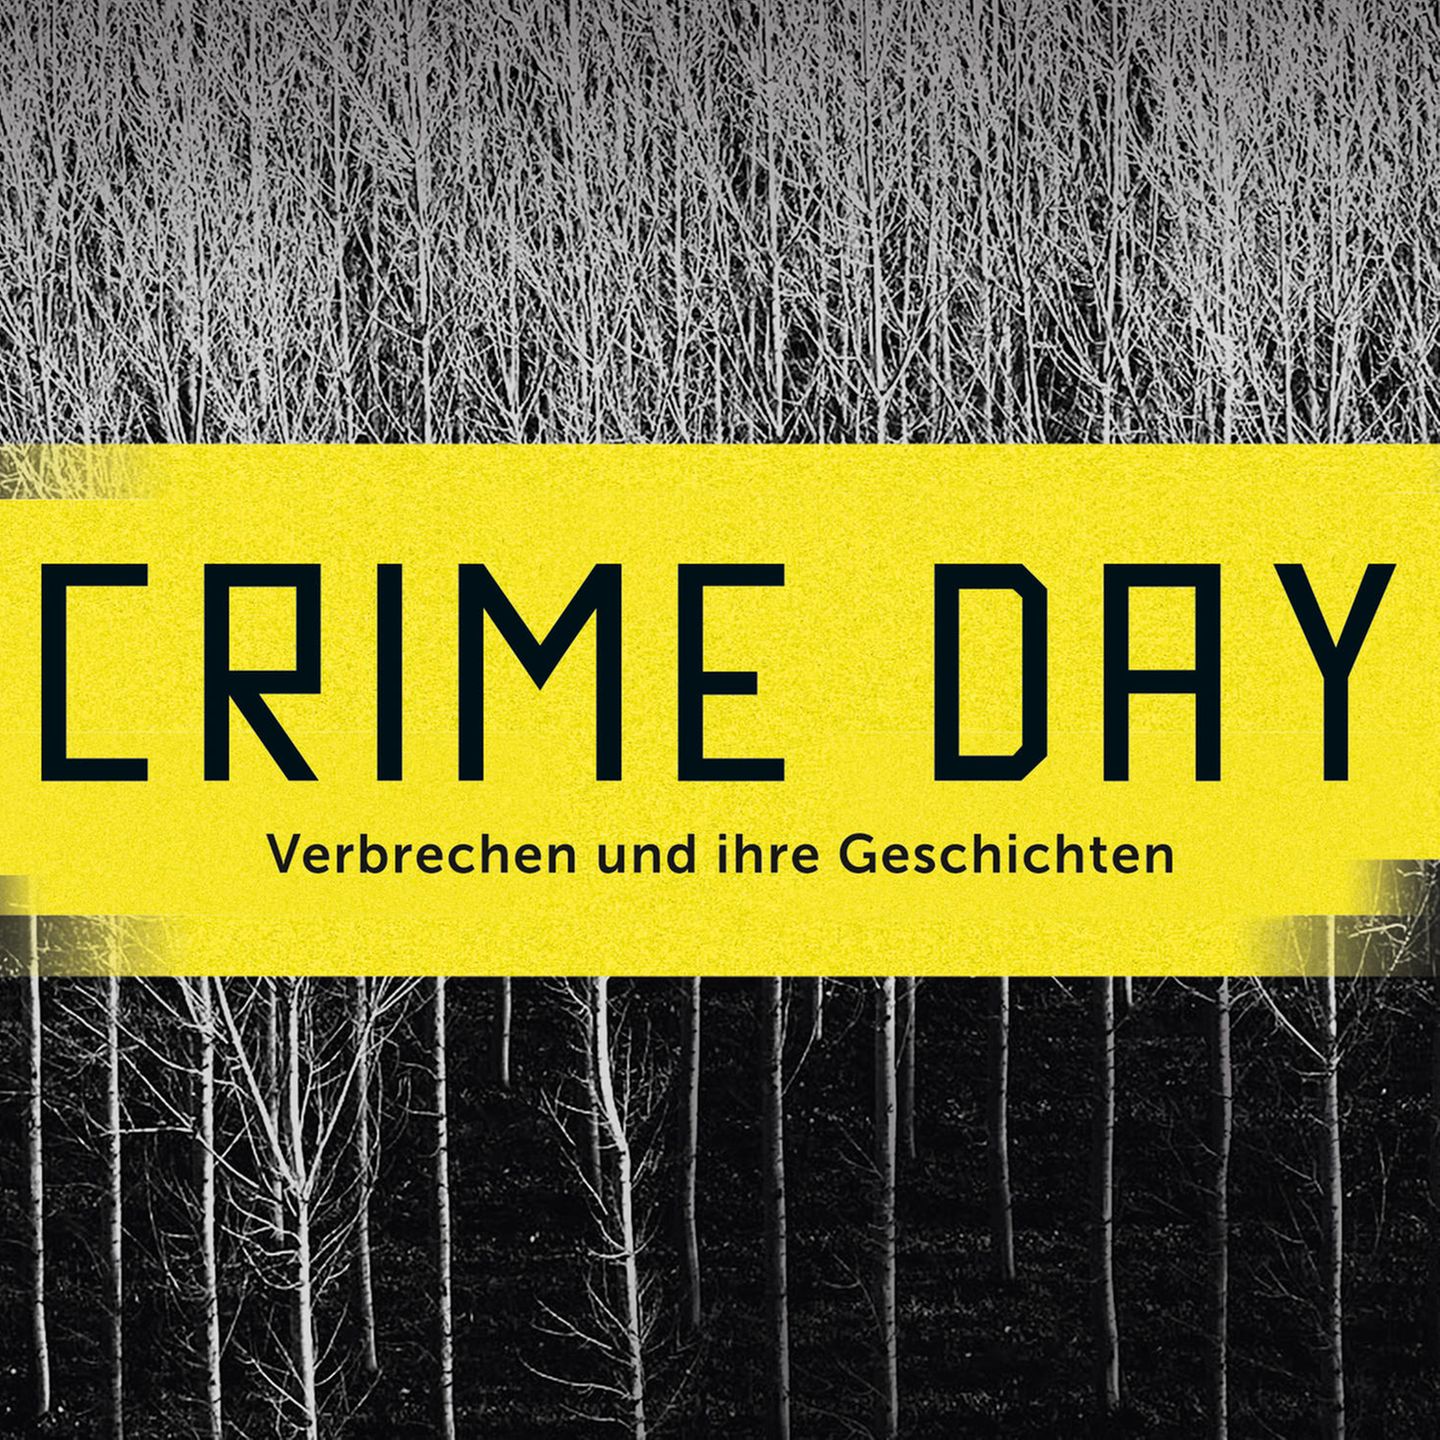 Crime Day Das Neue Exklusive Event Fur Crime Fans Stern De